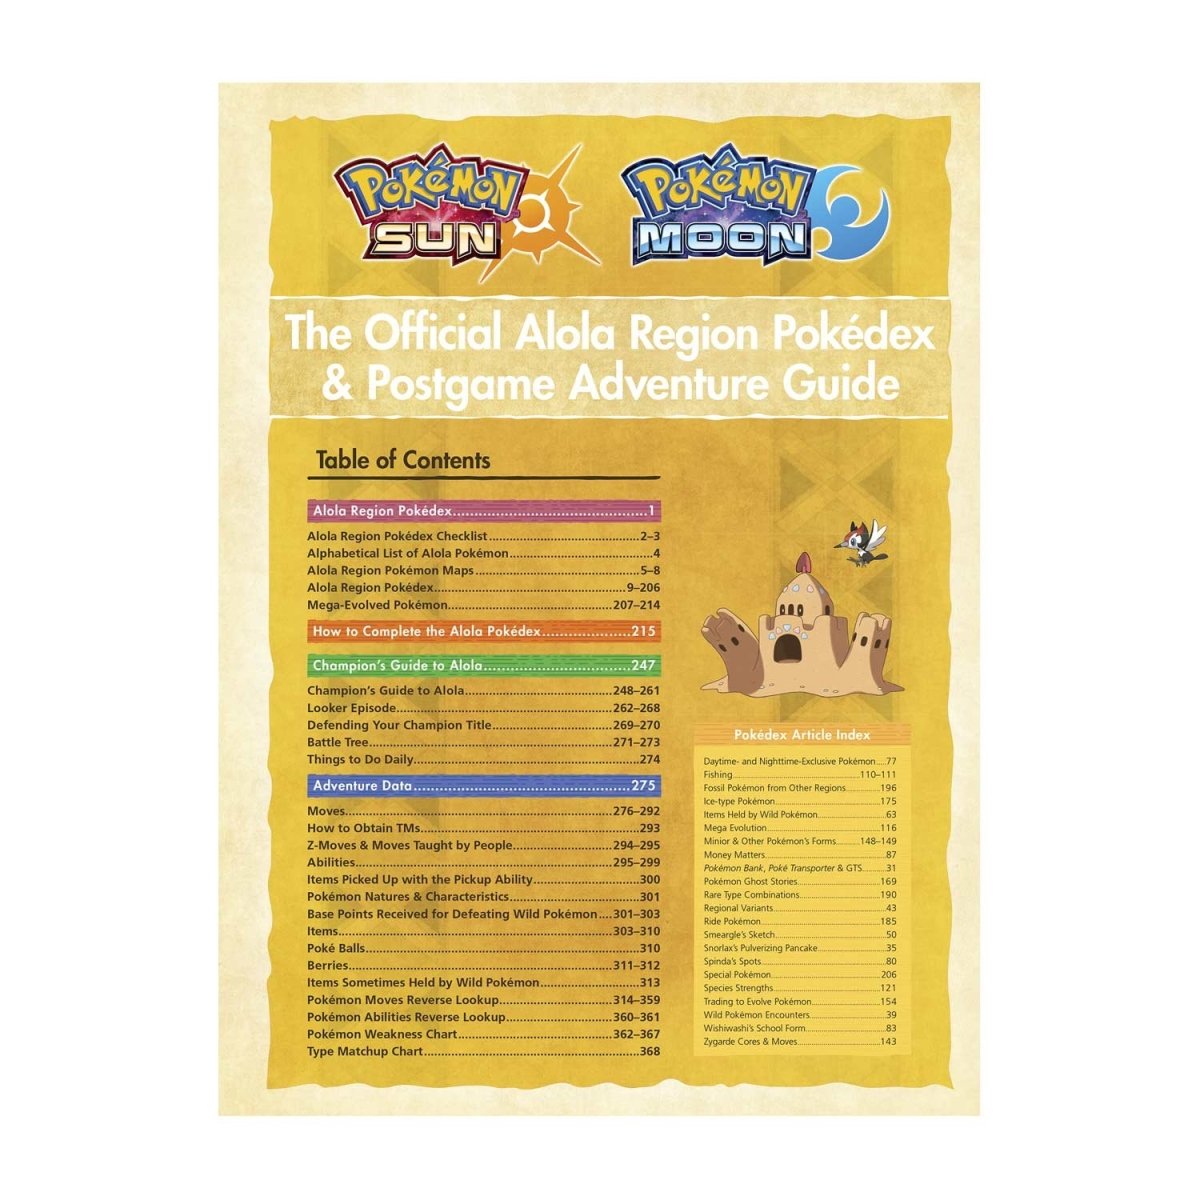 Visual guide to full Alola Regional PokéDex, Pokemon GO Hub